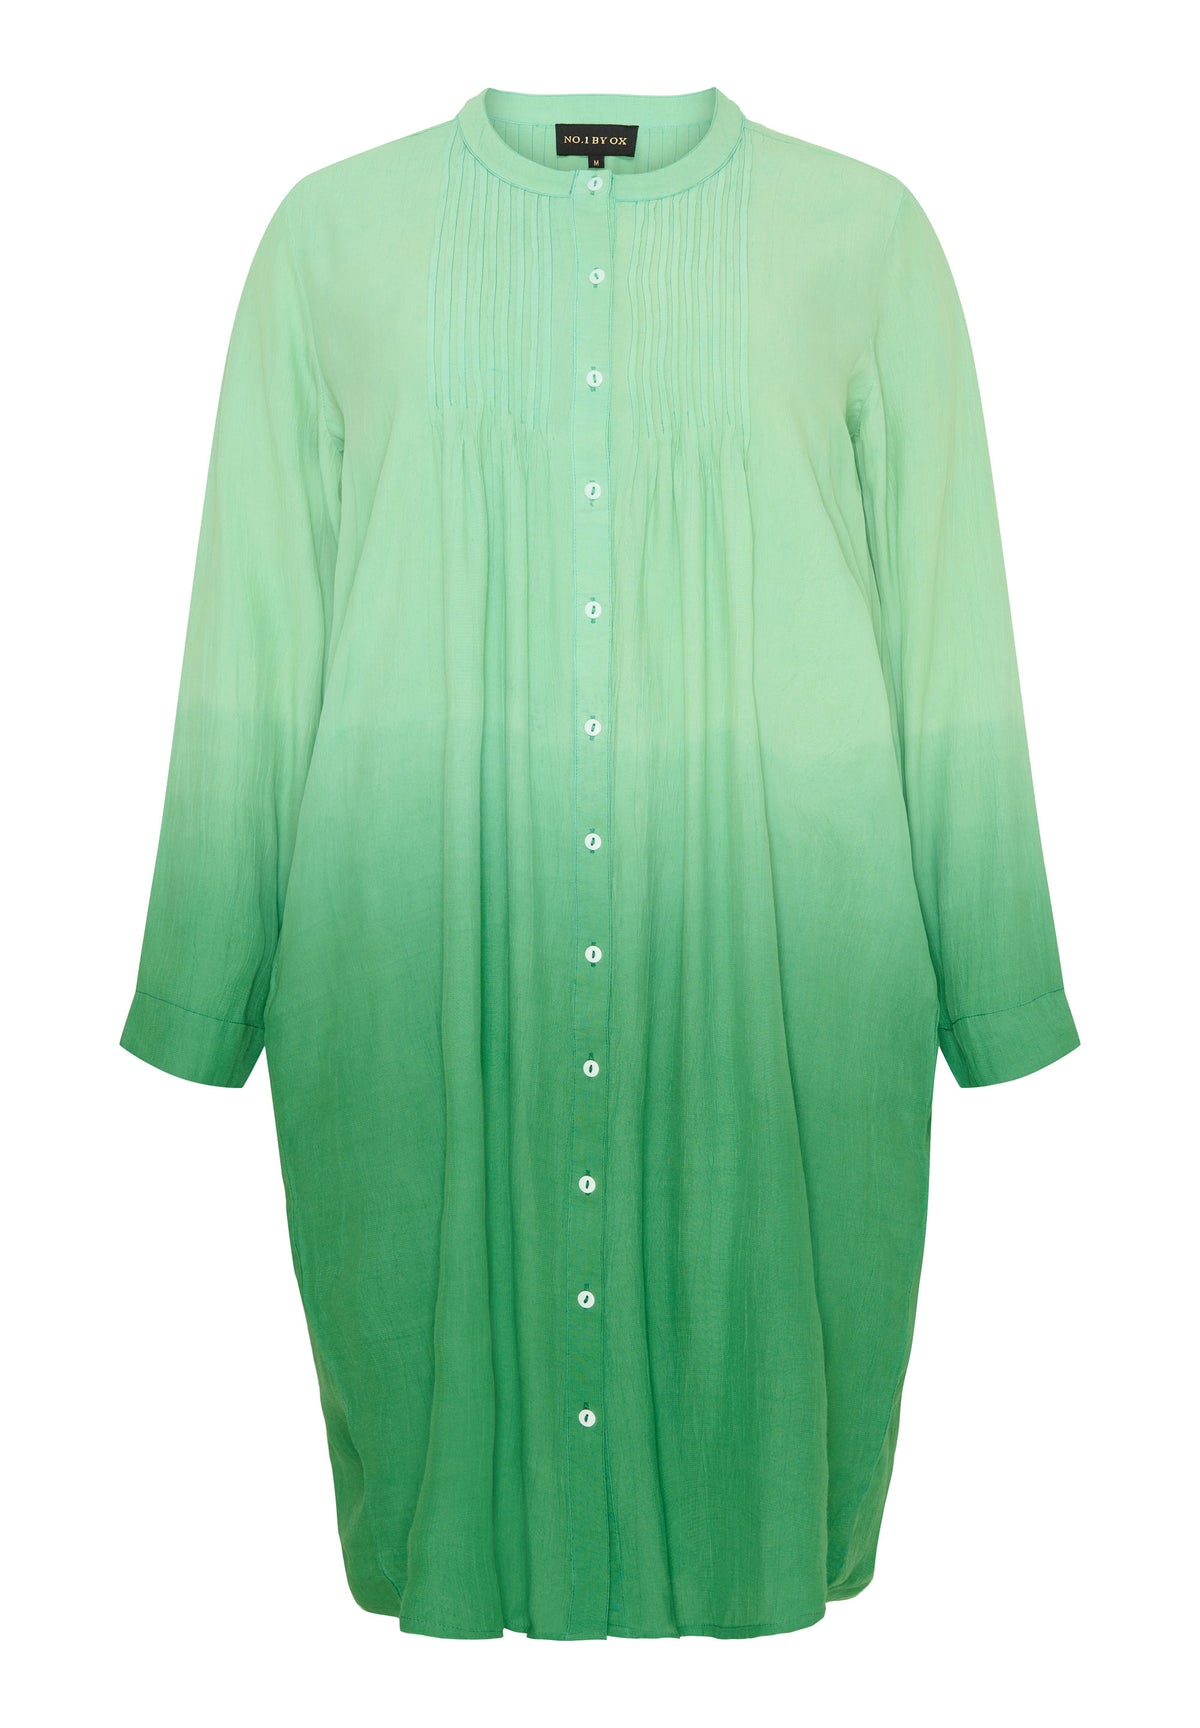 NO. 1 BY OX Shirt Dress w pleats Kjoler Spring Green